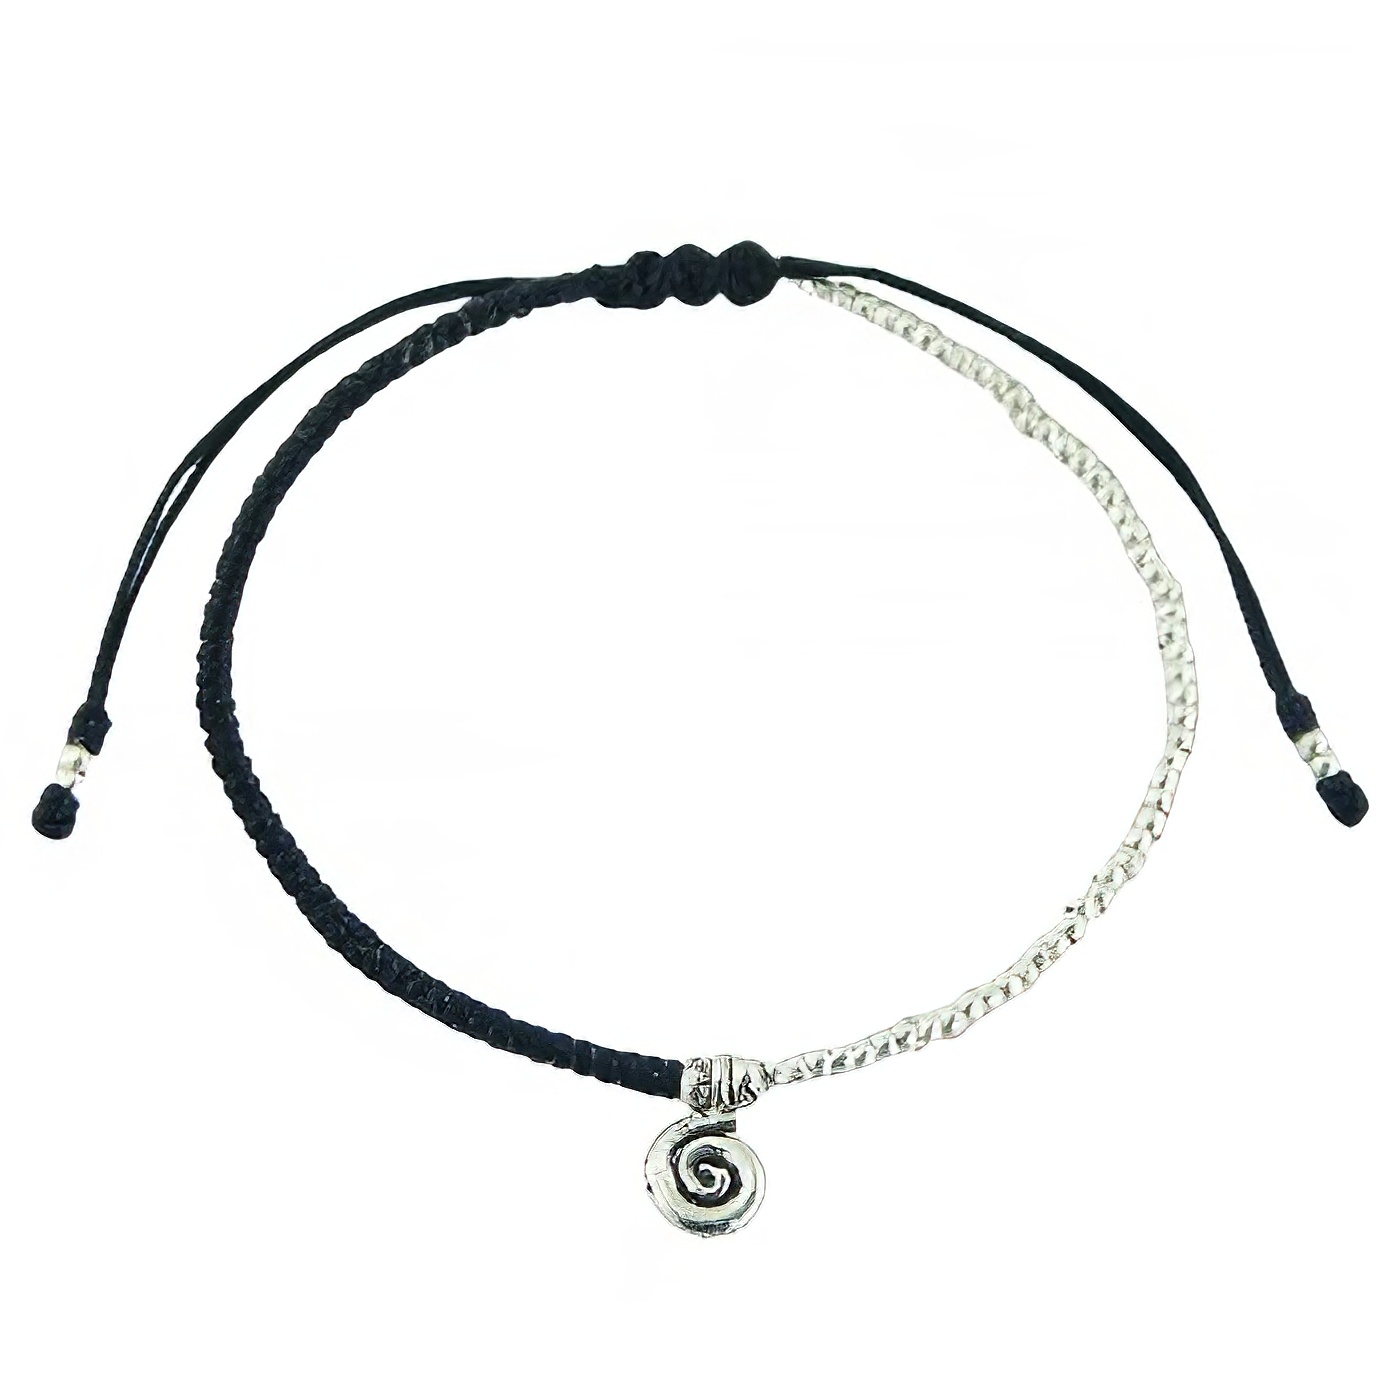 Tibetan Spiral Silver Charm and Small Beads Macrame Bracelet 